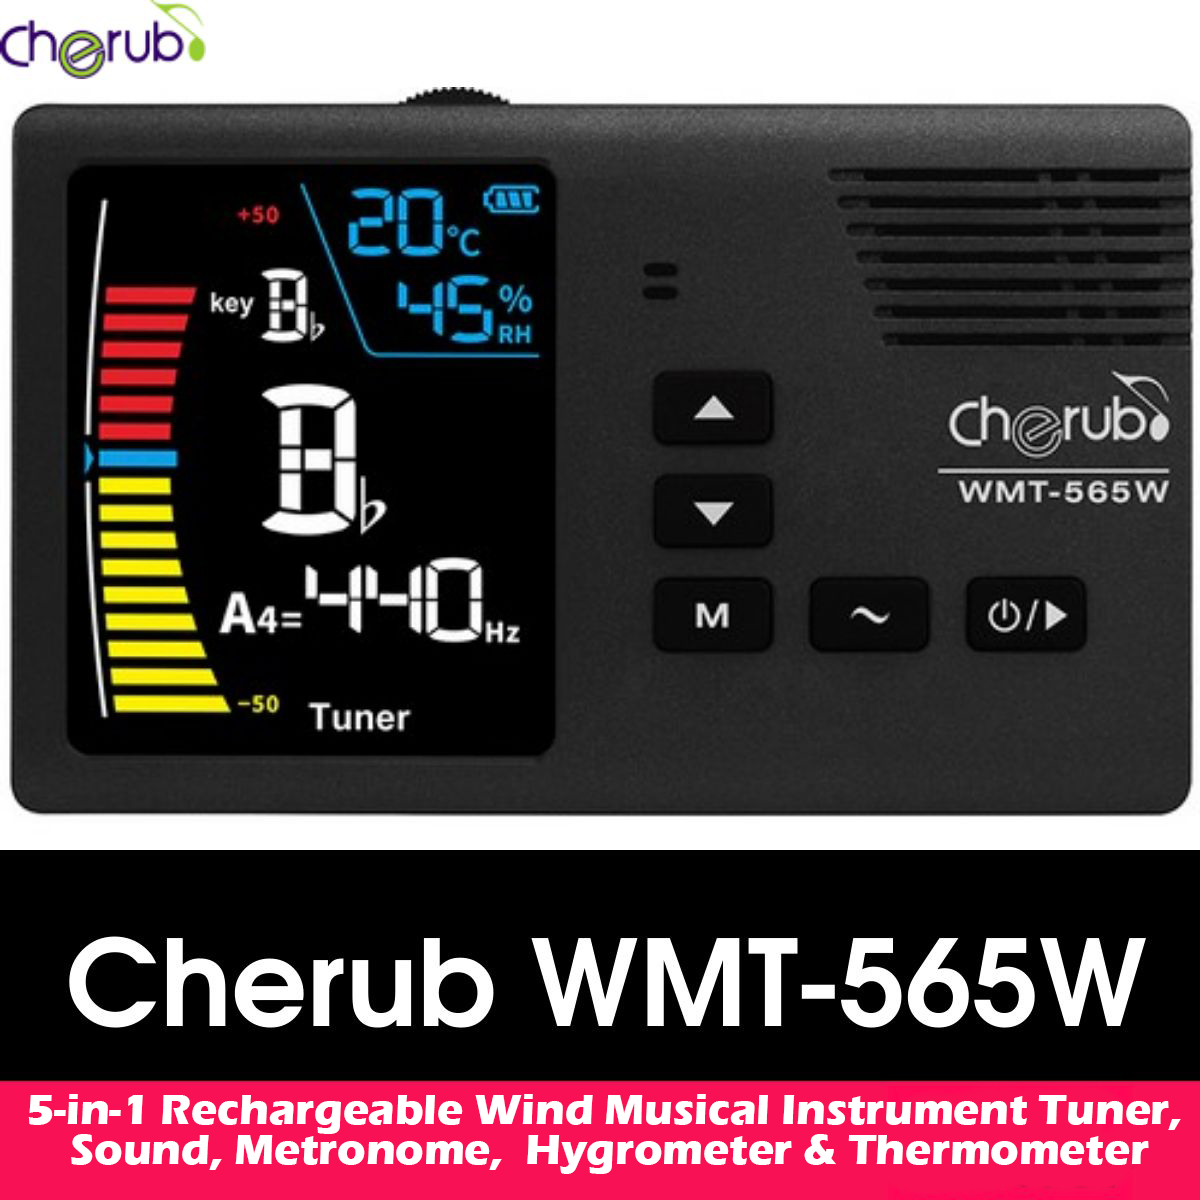 Cherub WMT-565W 5-in-1 Rechargeable Wind Musical Instrument Tuner, Sound, Metronome, Hygrometer